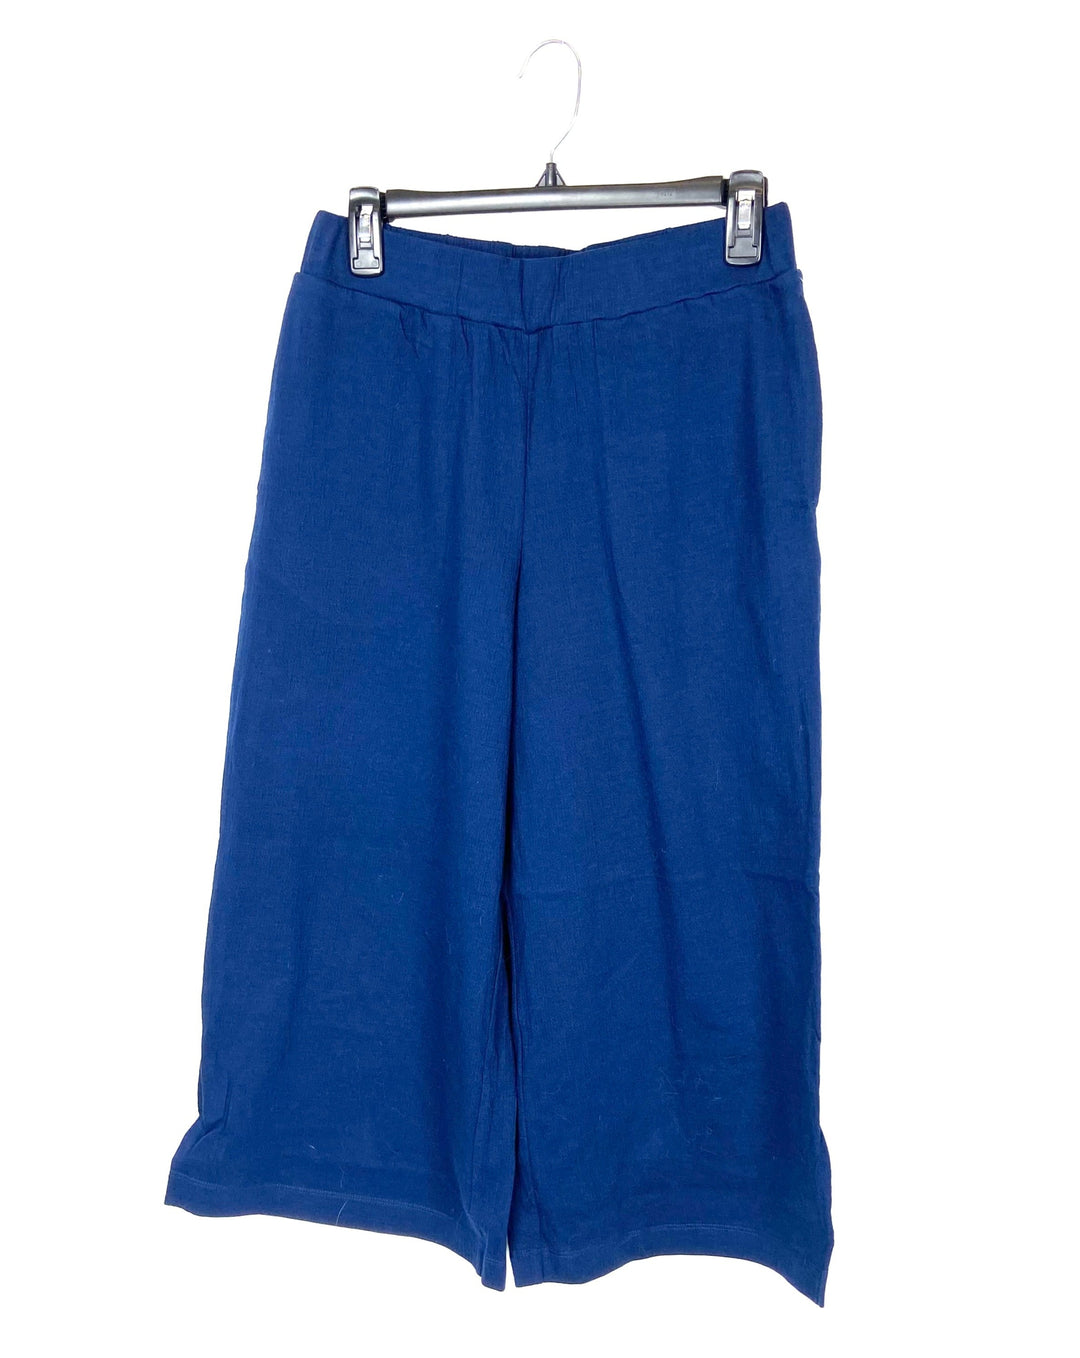 Navy Blue Crop Pants - Size 1X